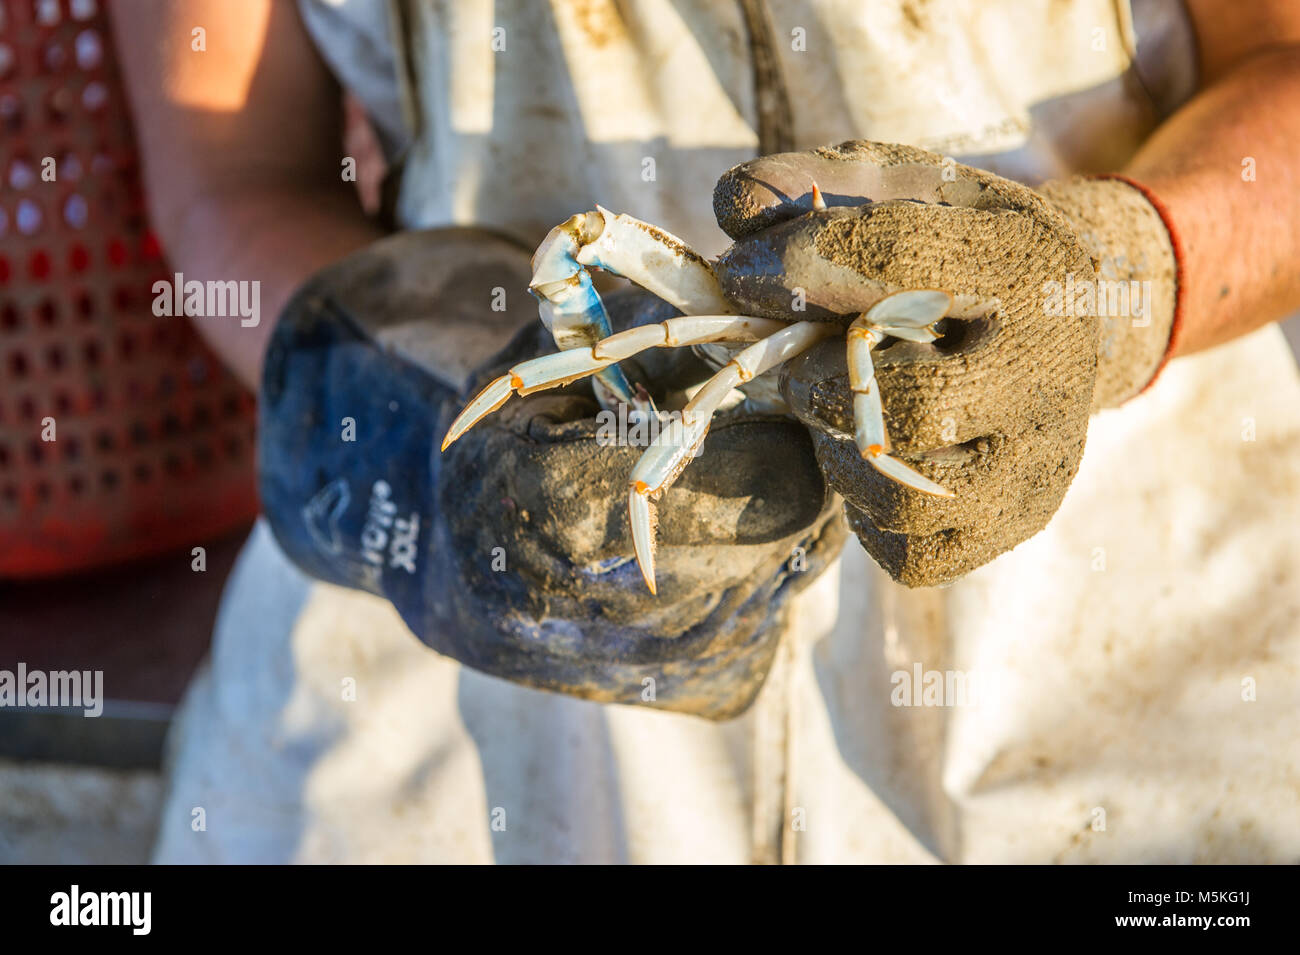 Waterman wearing work gloves handles Chesapeake blue crab, Dundalk, Maryland. Stock Photo